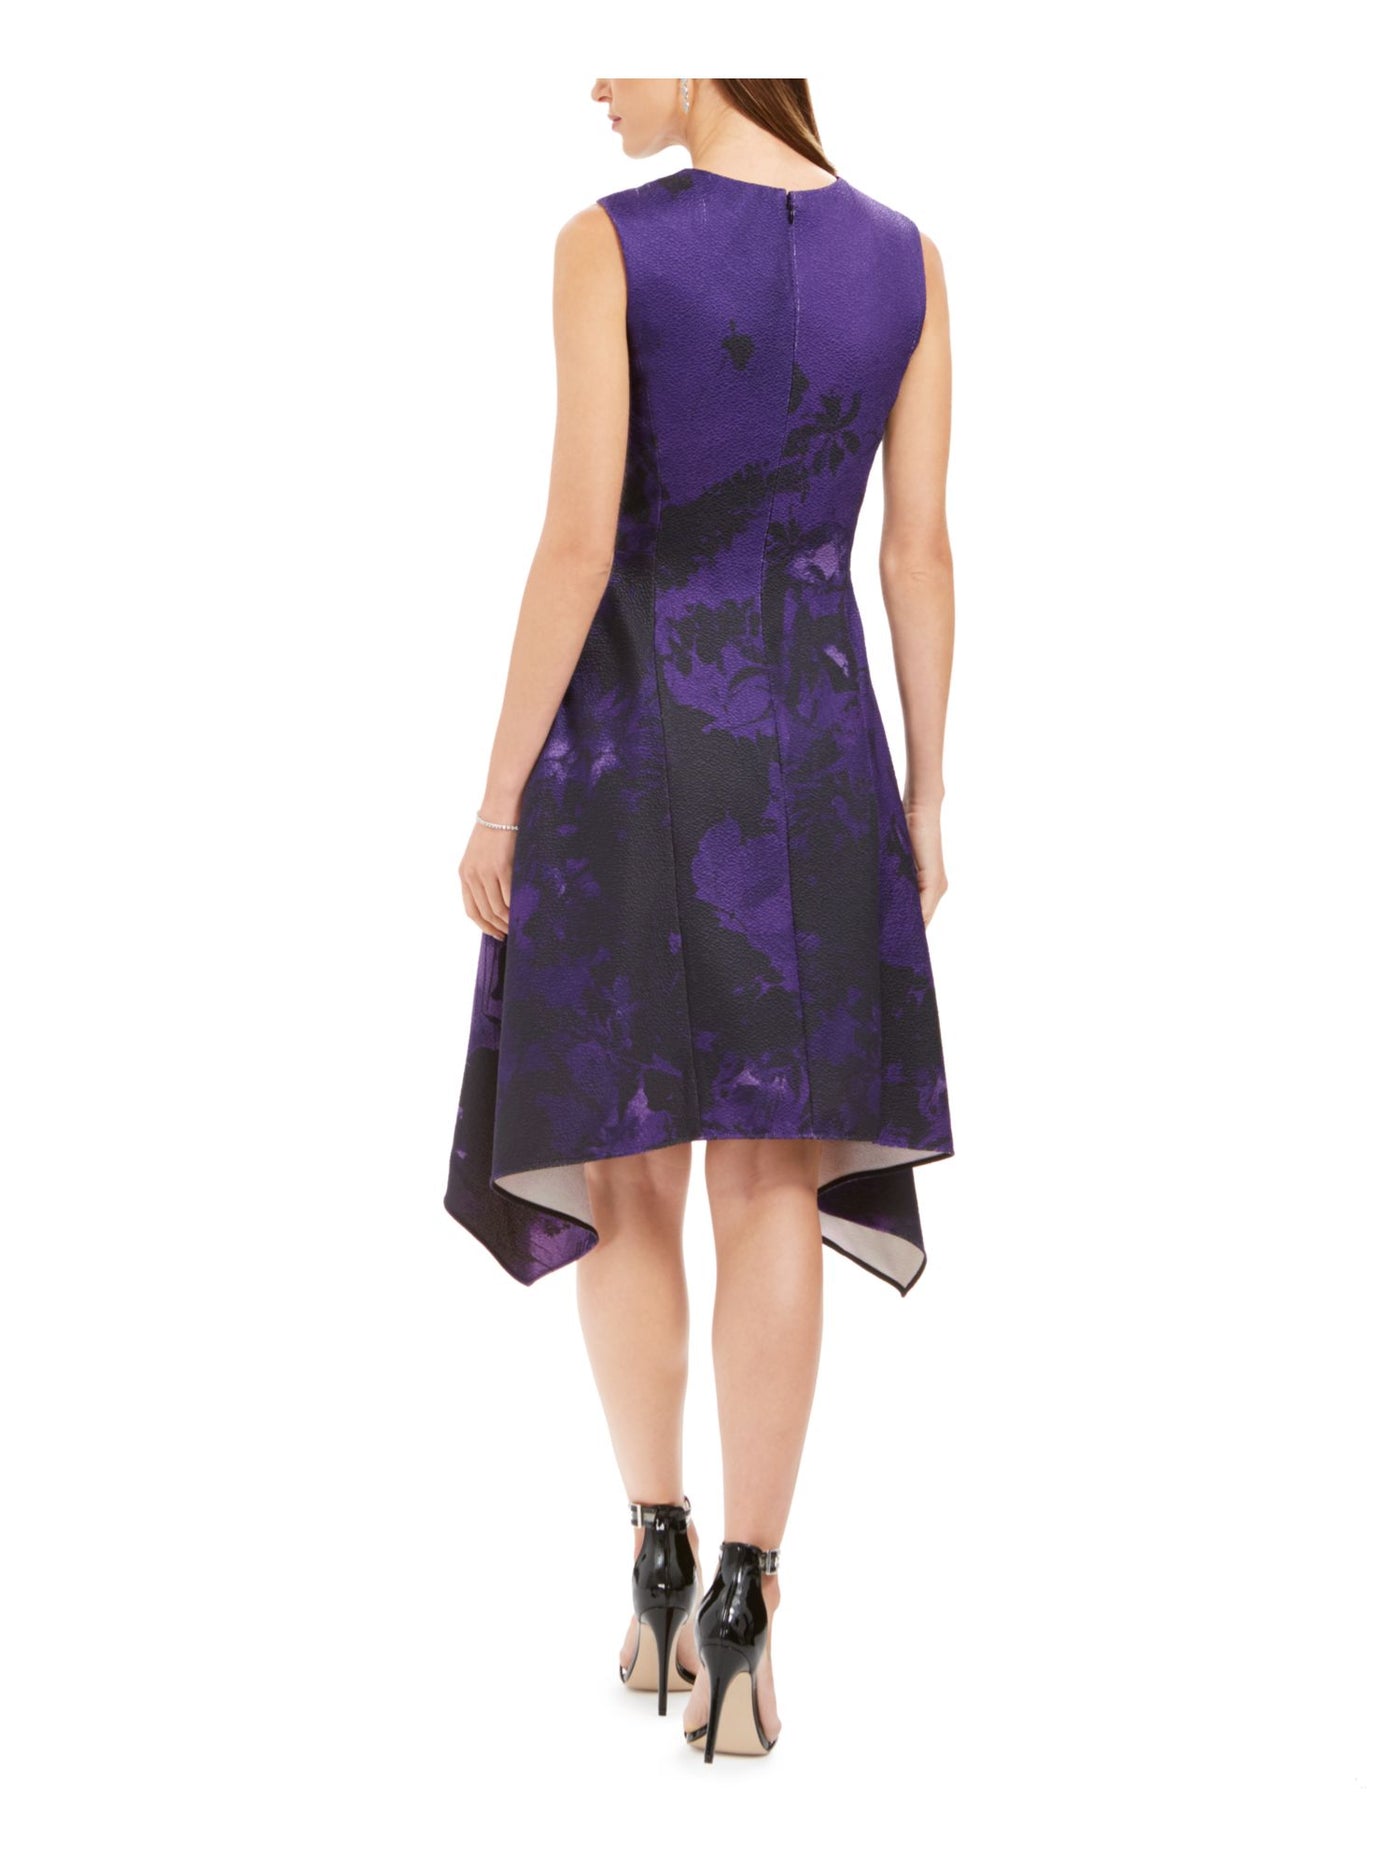 NATORI Womens Purple Zippered Printed Sleeveless Jewel Neck Above The Knee Party Fit + Flare Dress 10